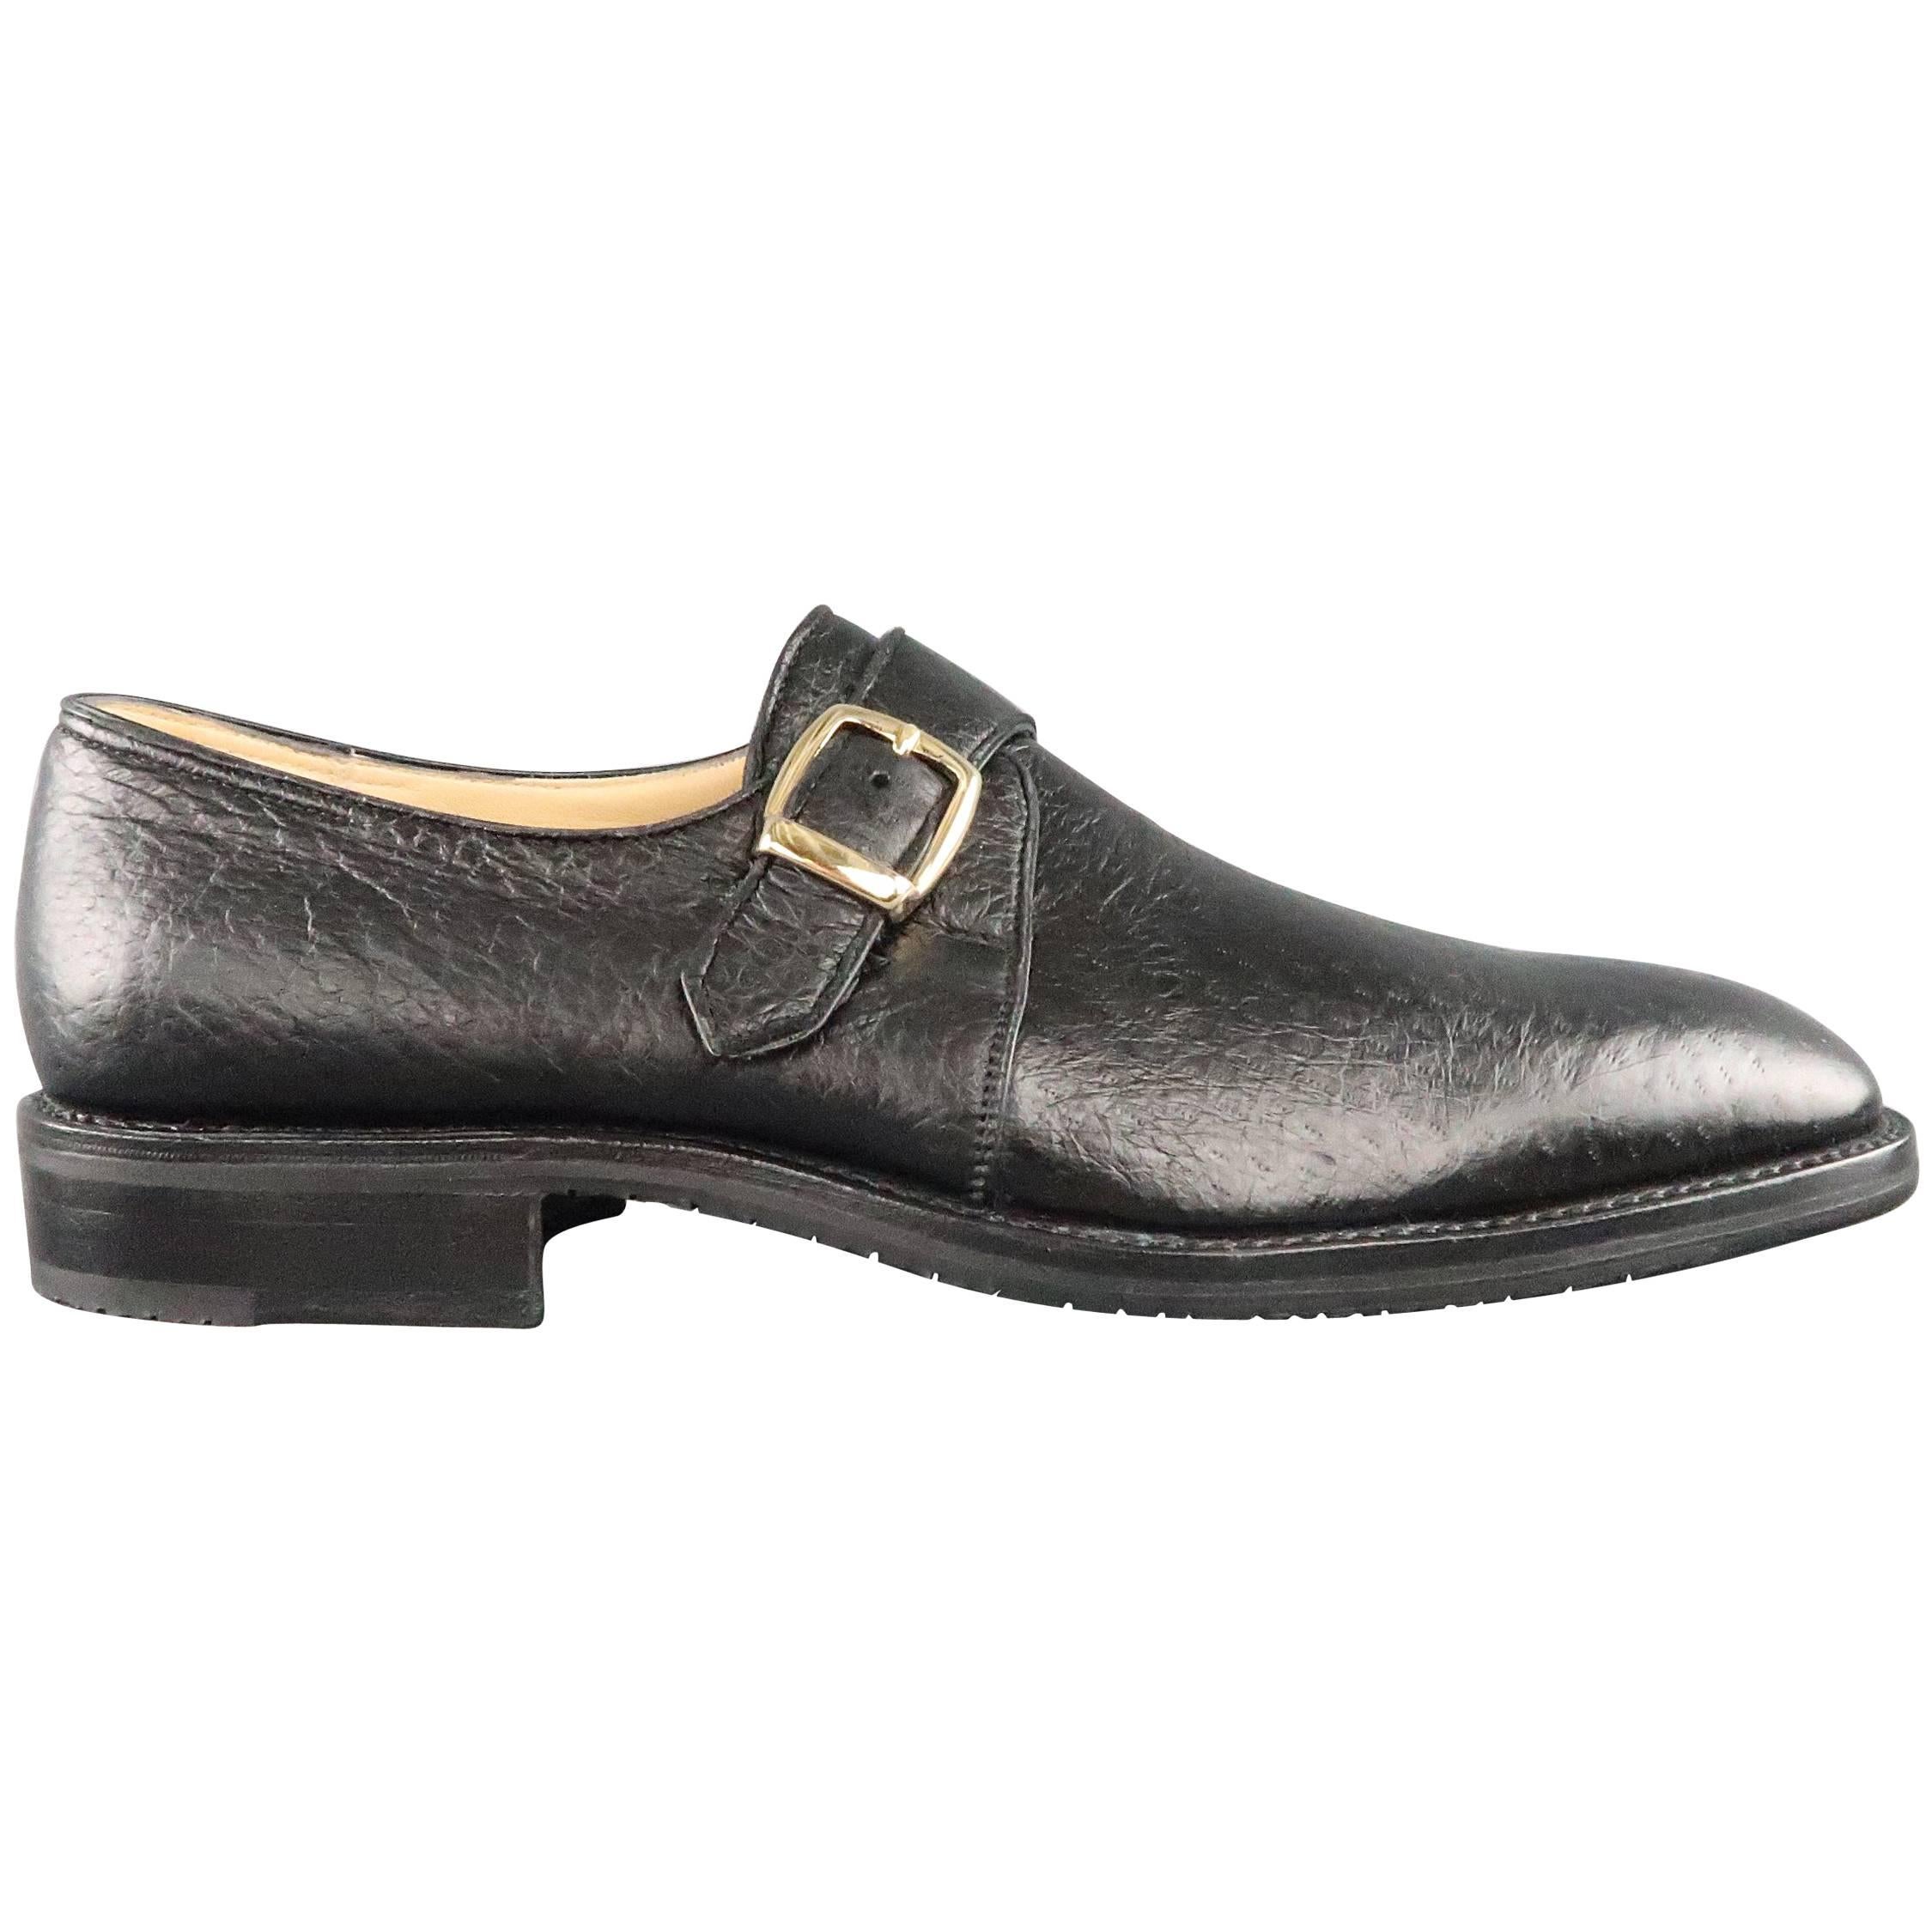 Men's GRAVATI Size 9.5 Black Textured Leather Monk Strap Loafers